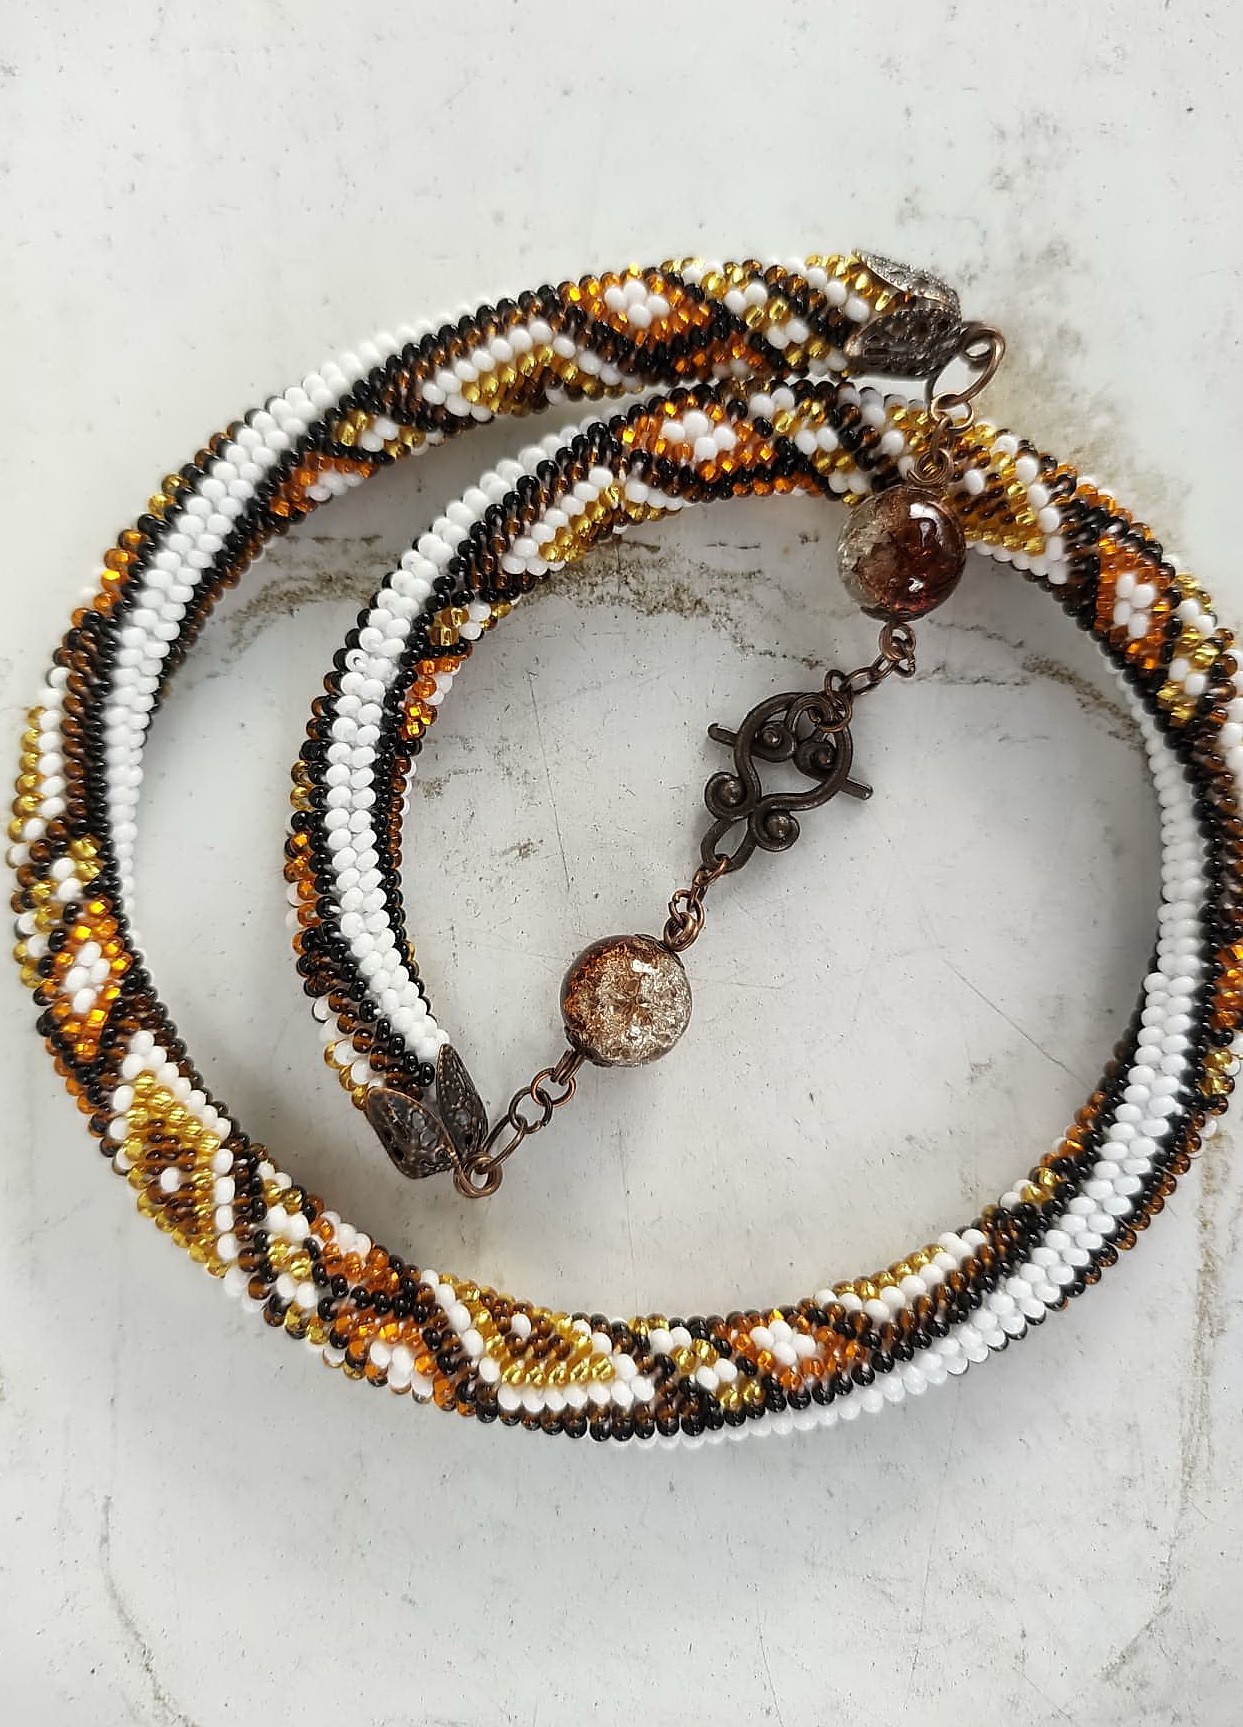 Necklace and bracelet handmade from Czech Preciosa beads